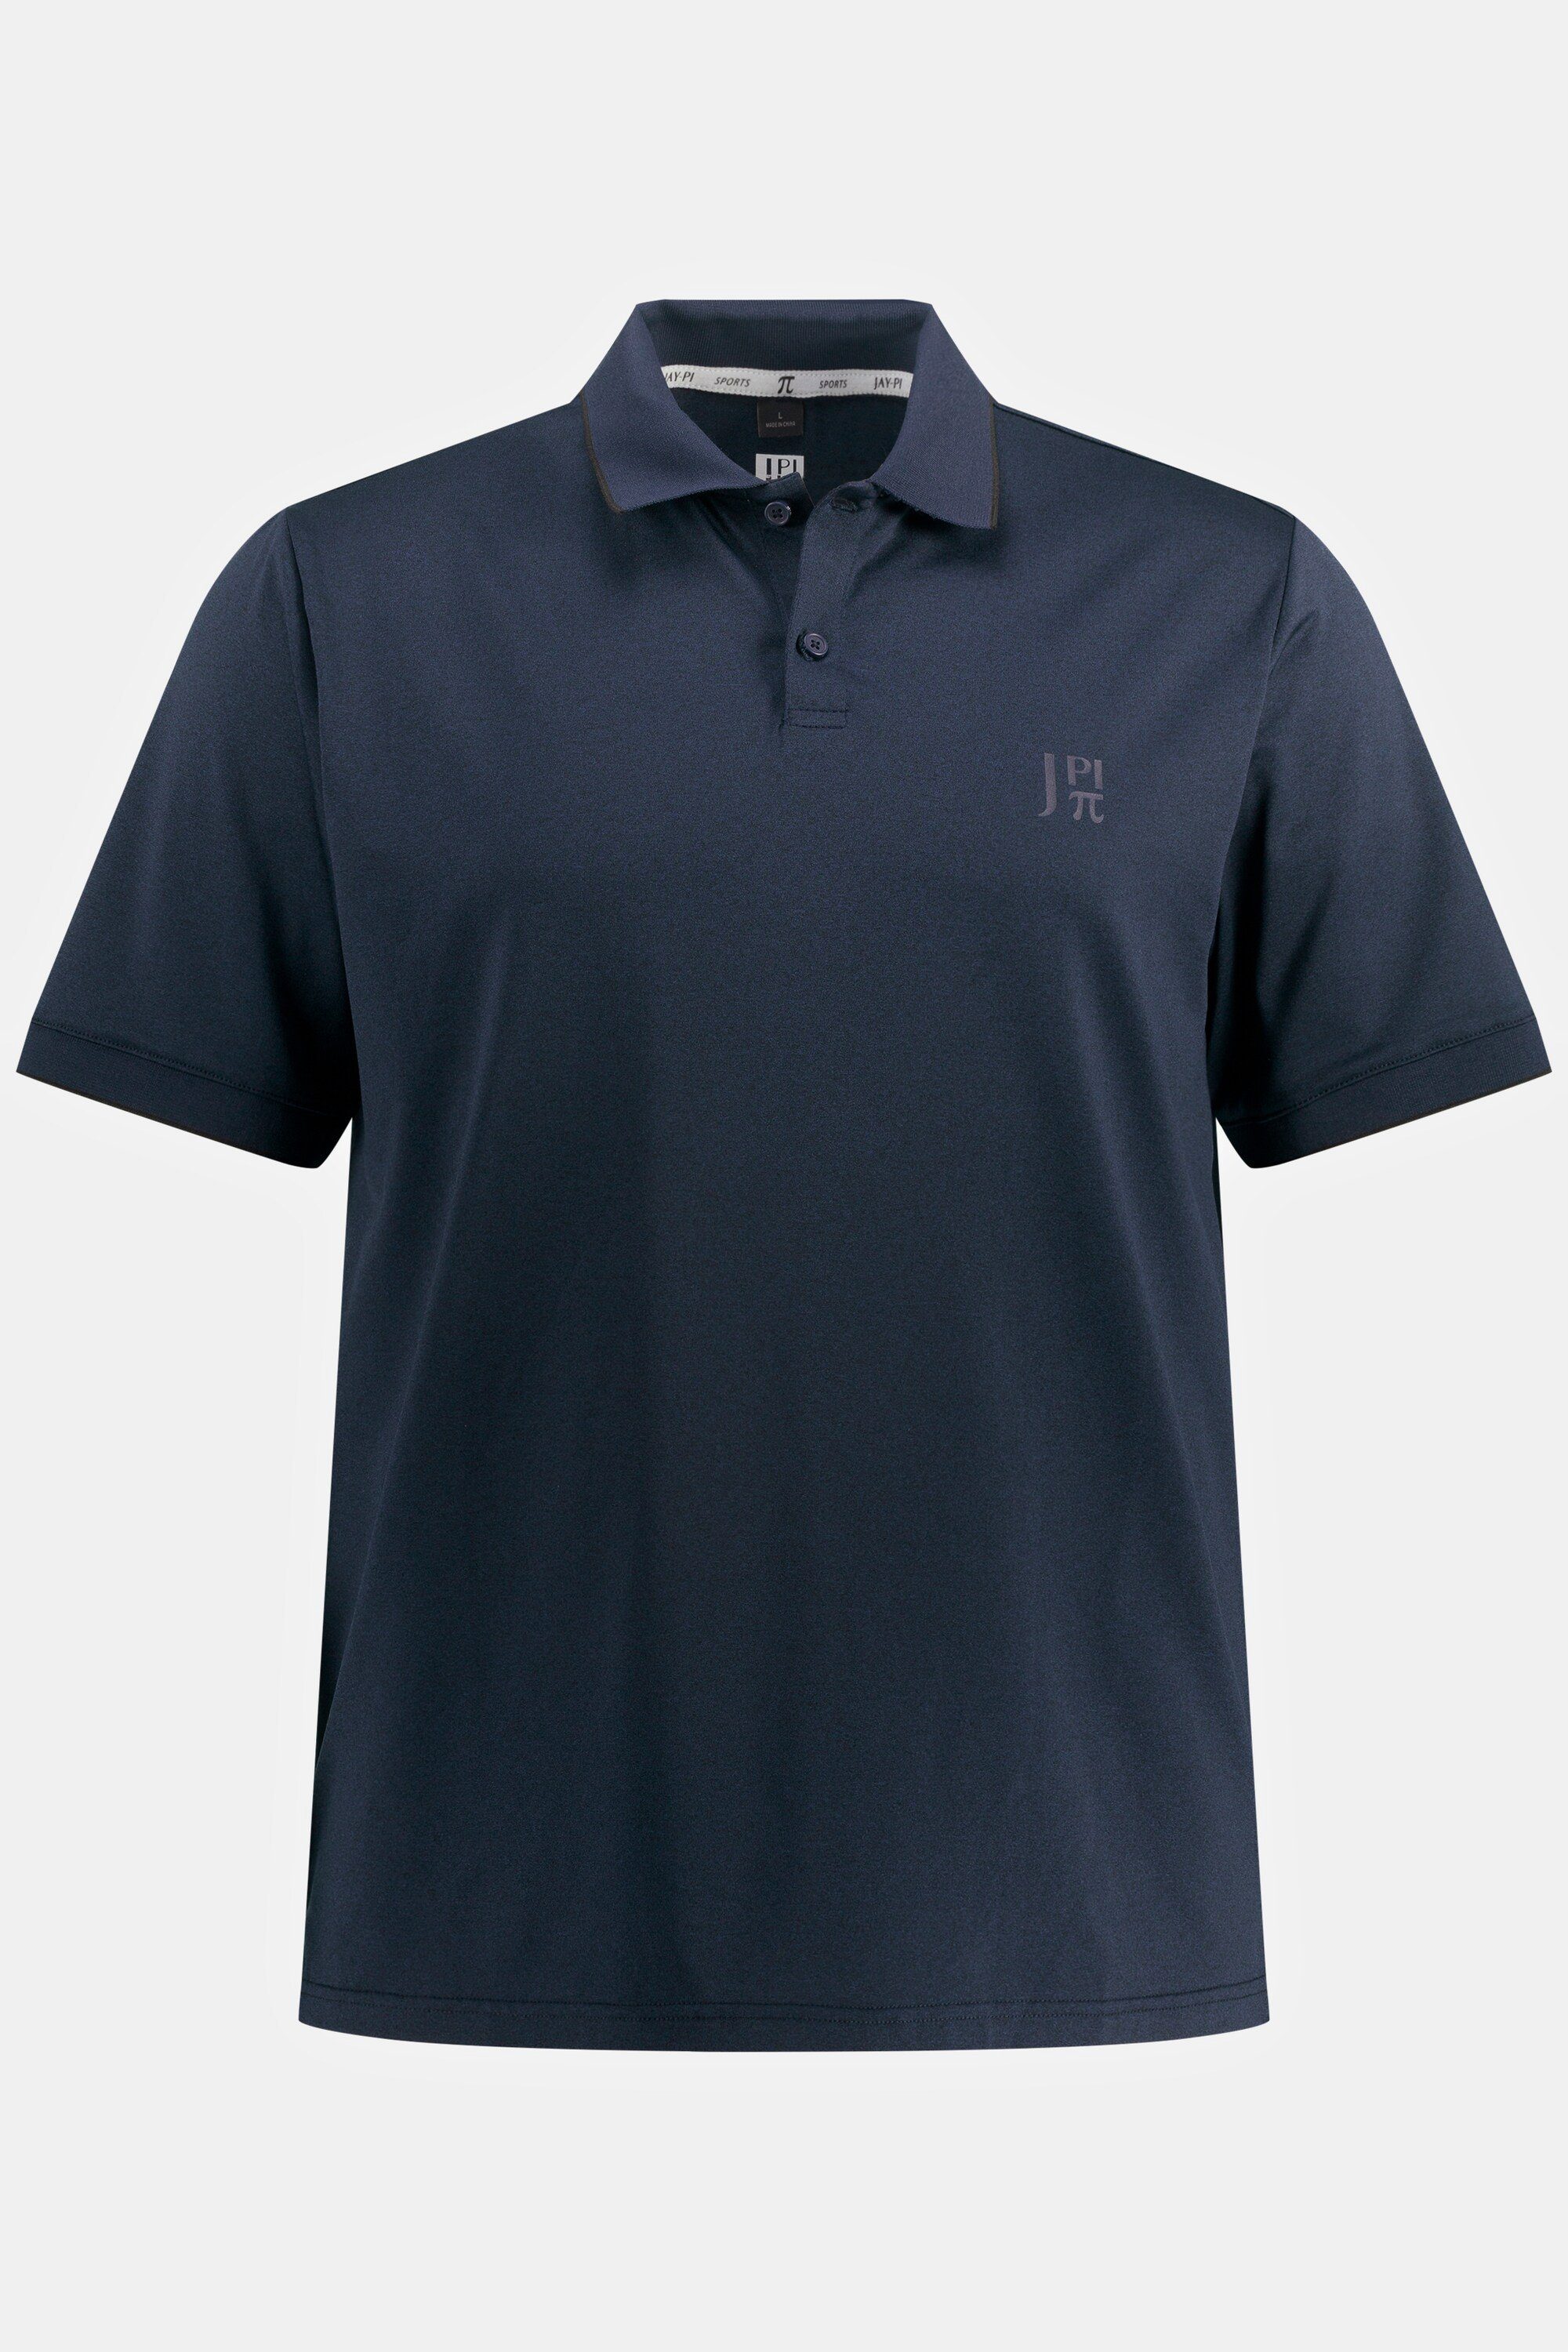 Poloshirt JP1880 QuickDry Poloshirt mattes Golf nachtblau Halbarm